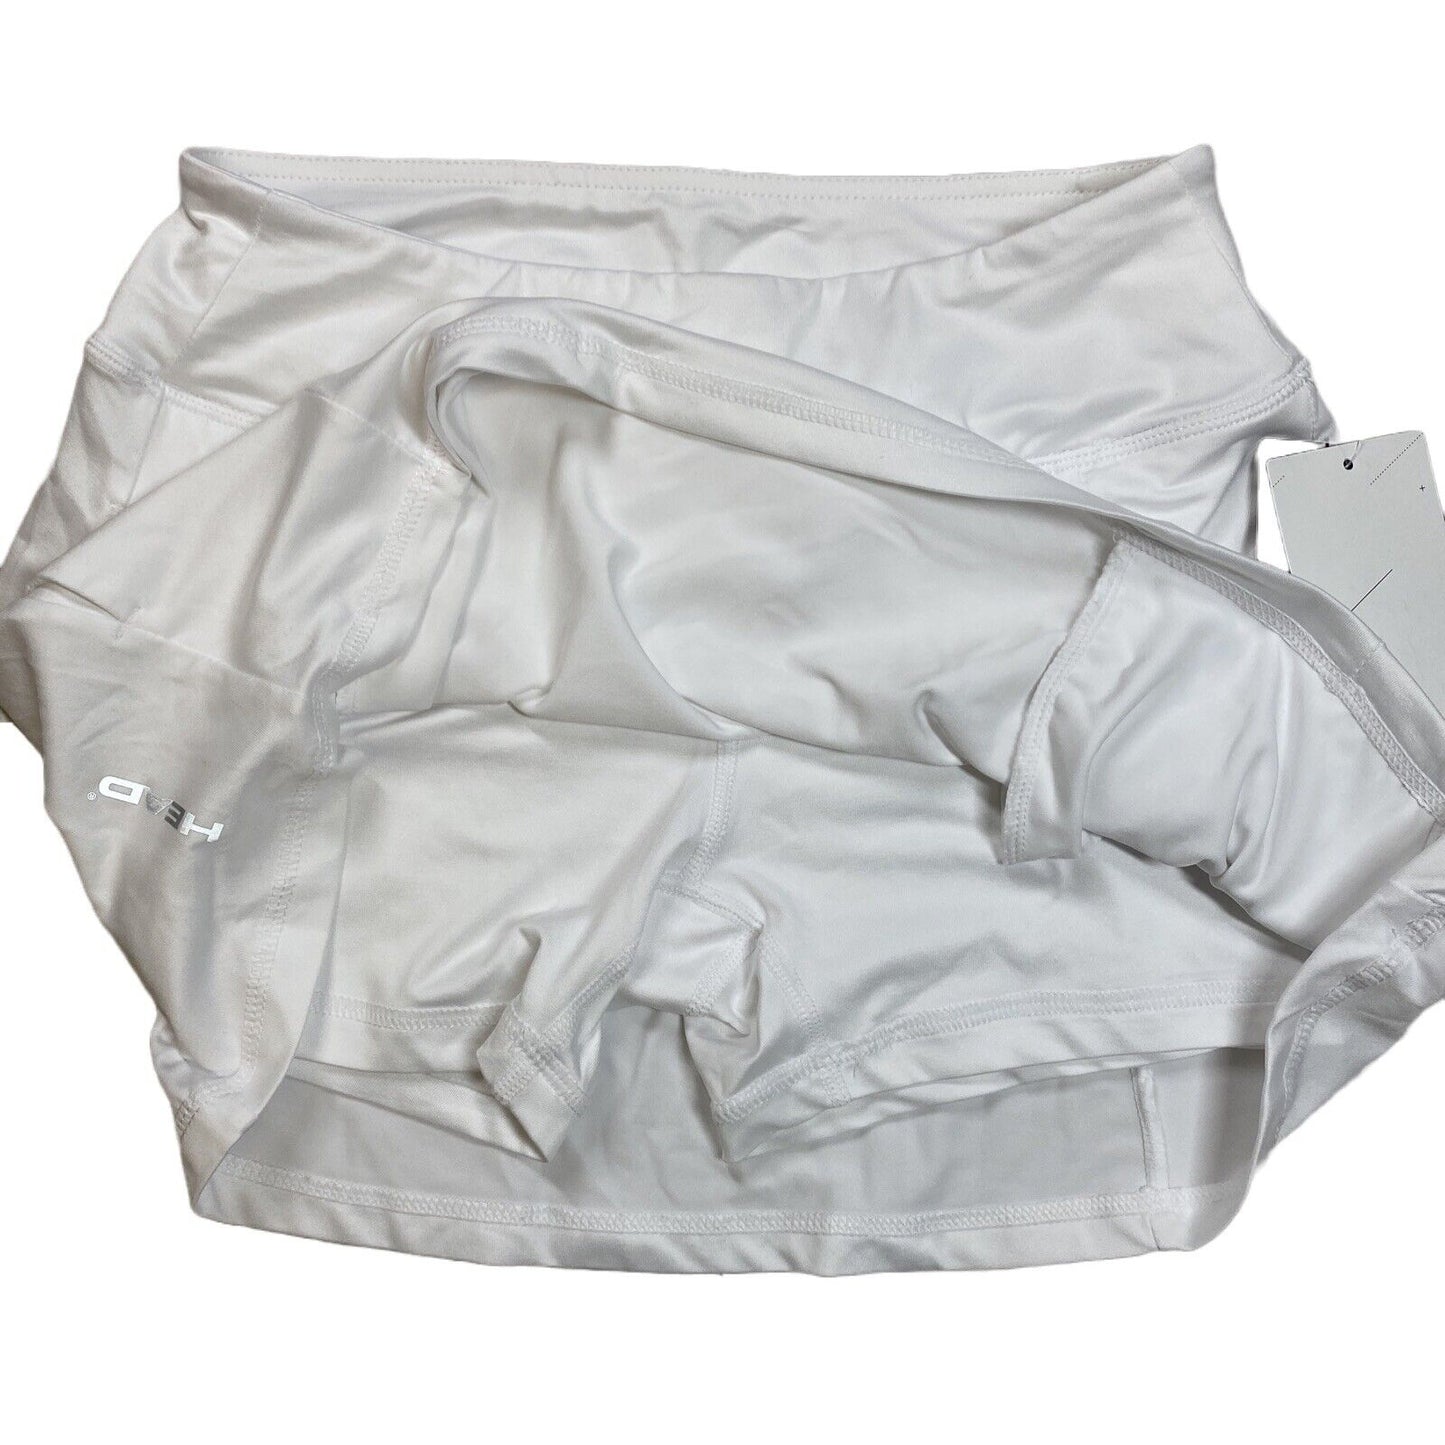 NUEVA falda pantalón con forro para mujer Head Stark White Athletic Dri Motion - XS